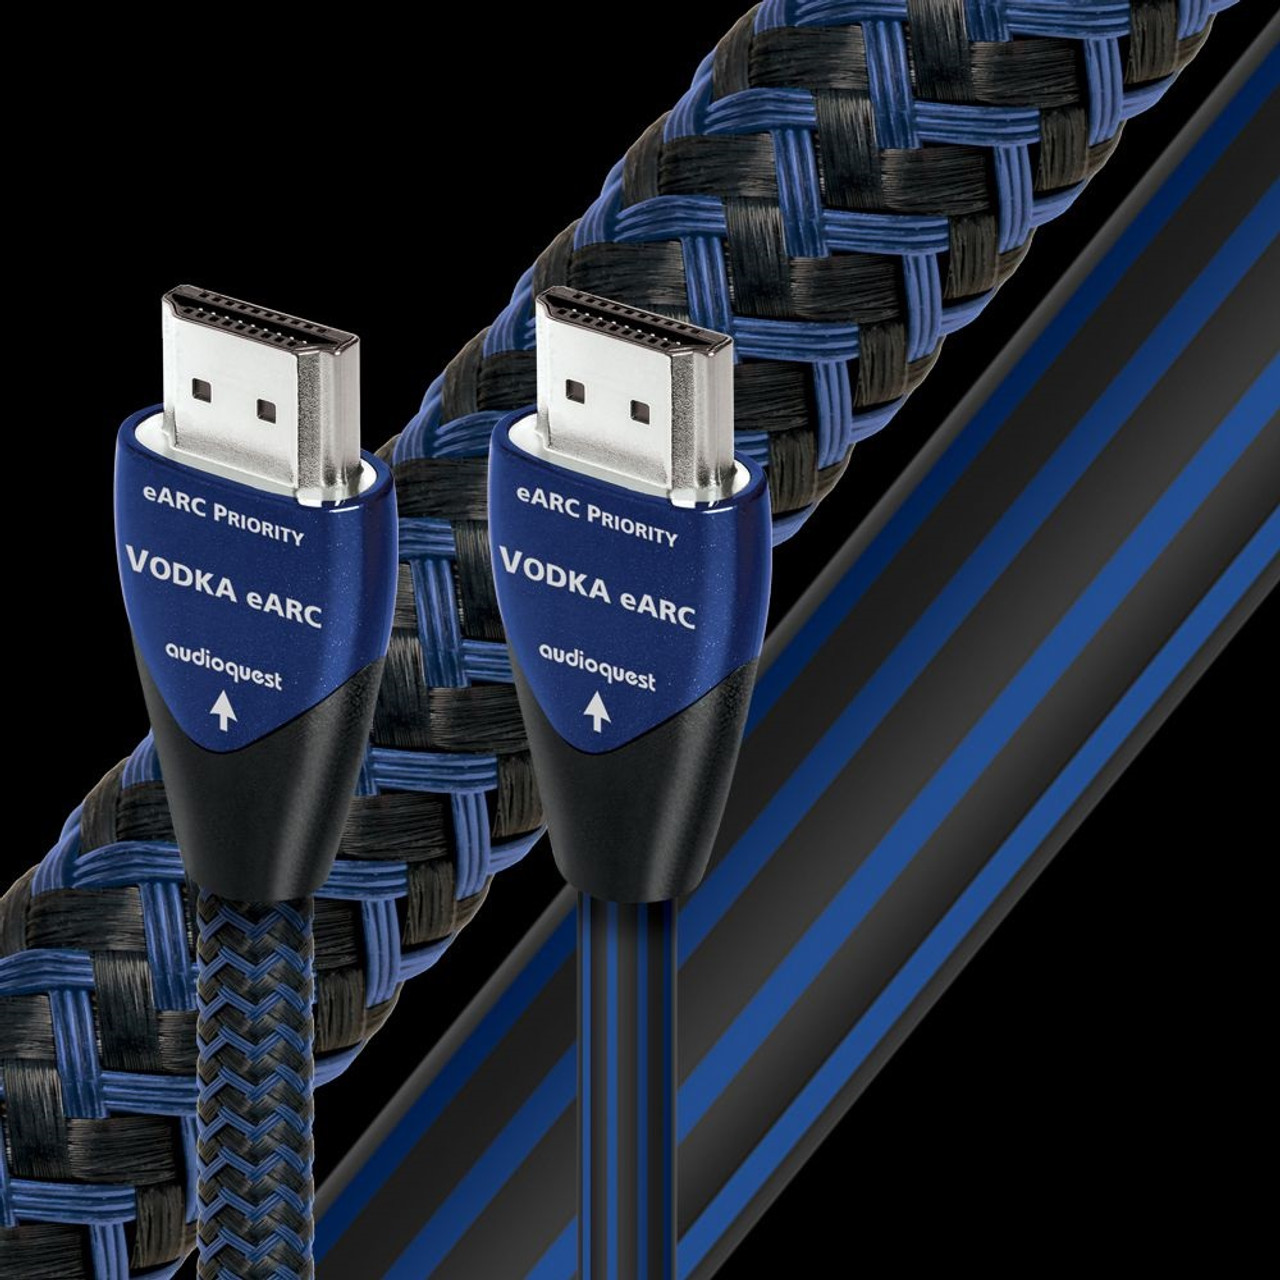 AudioQuest Vodka eARC 8K/10K 48Gbps HDMI Cable